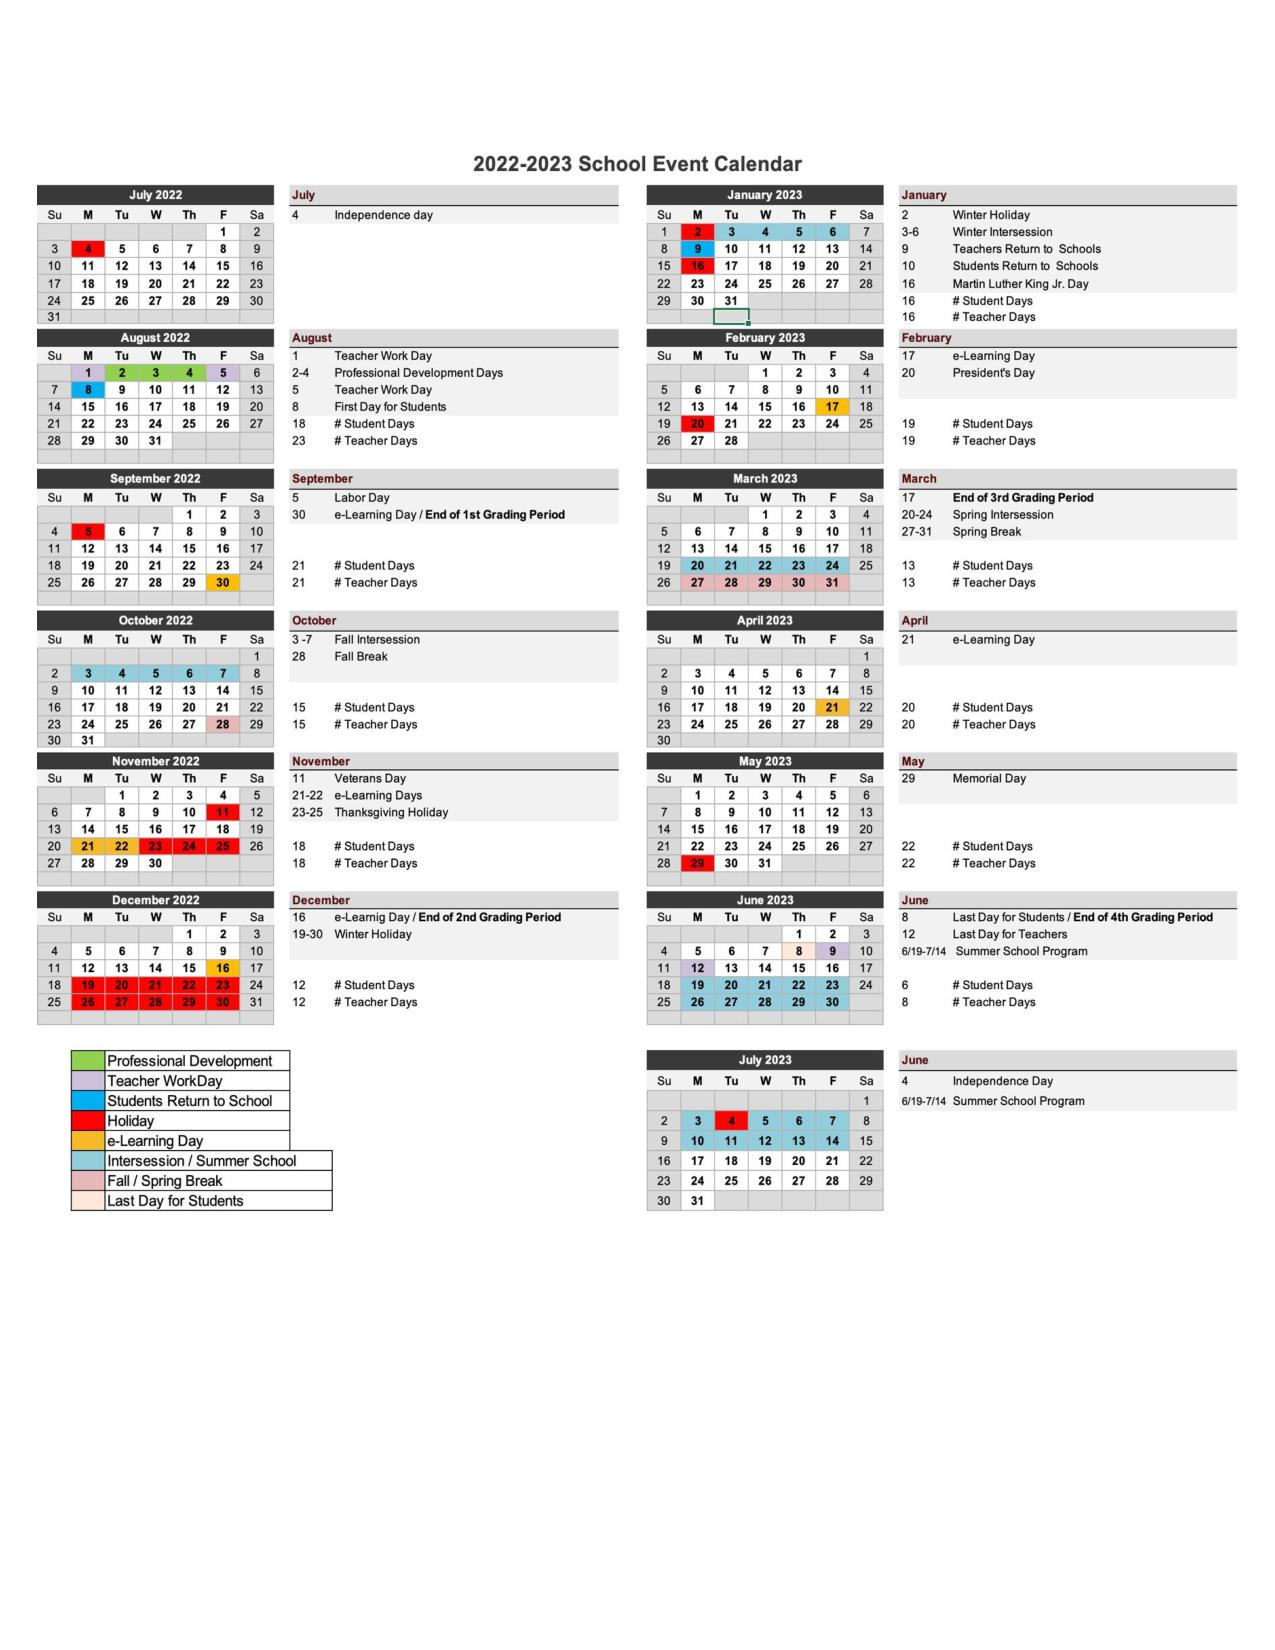 Birmingham City Schools Calendar 20222023 in PDF